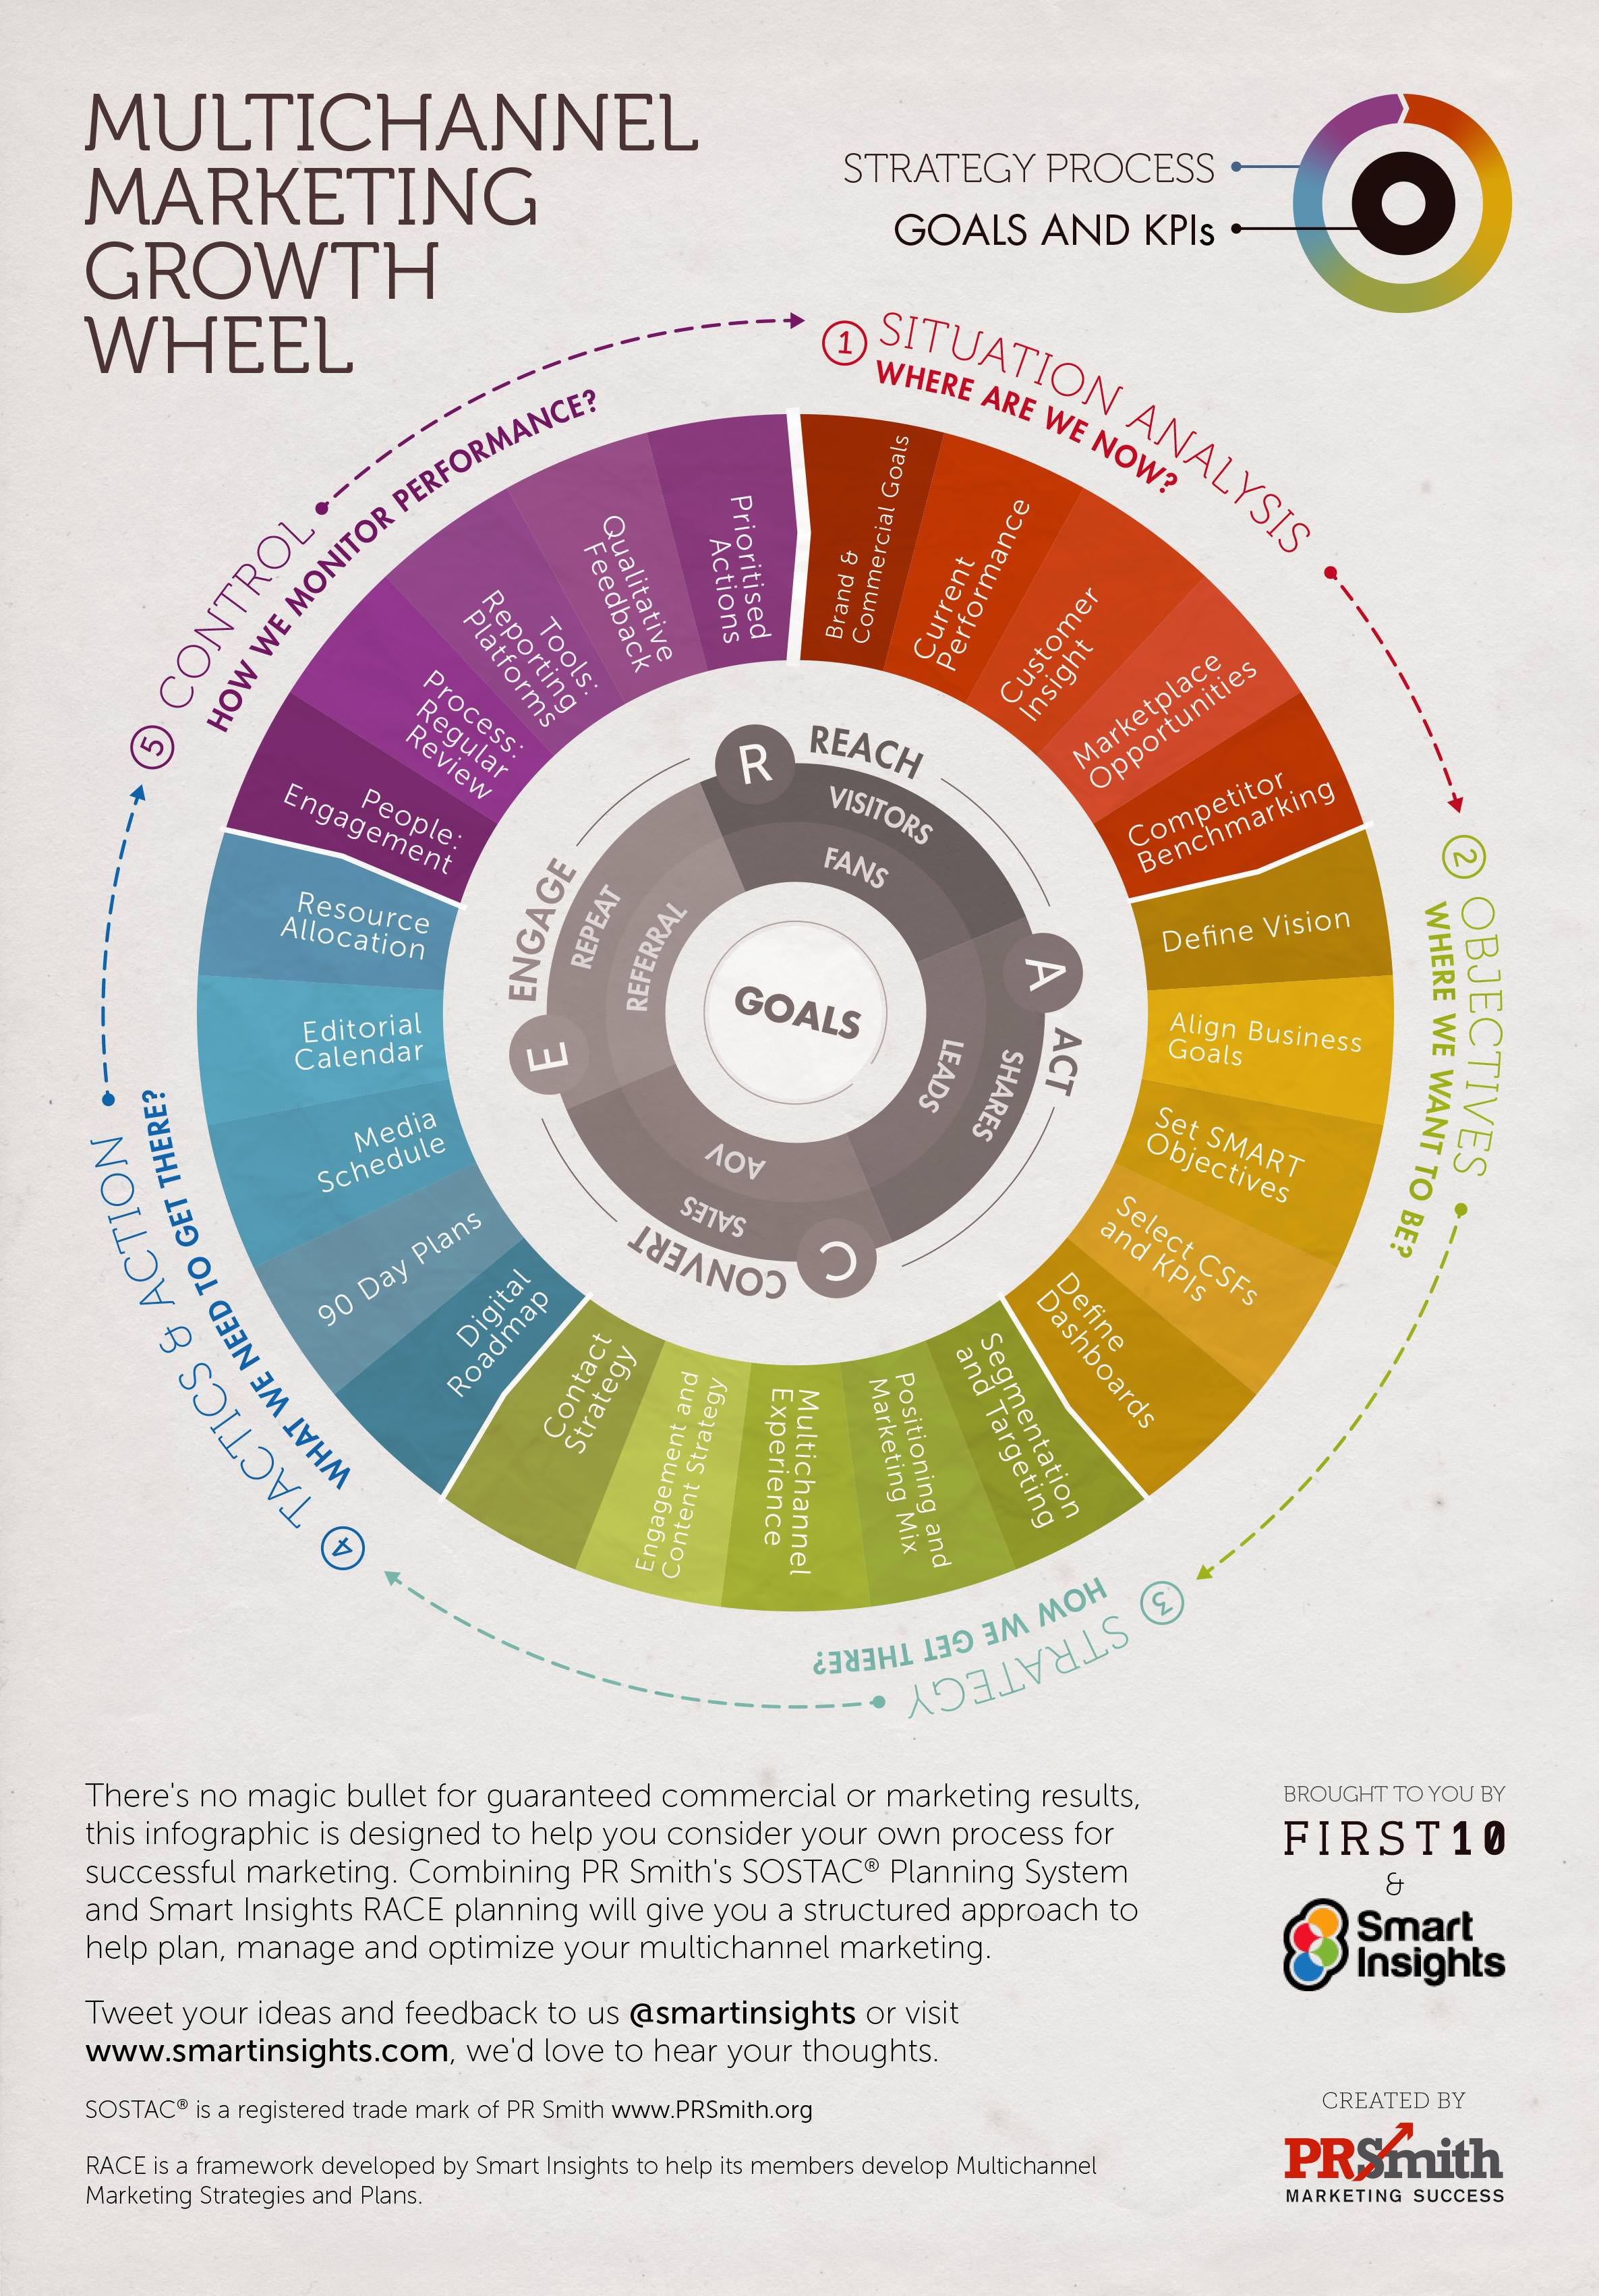 SOSTAC-RACE-marketing-growth-wheel-smart-insights-prsmith1.jpg